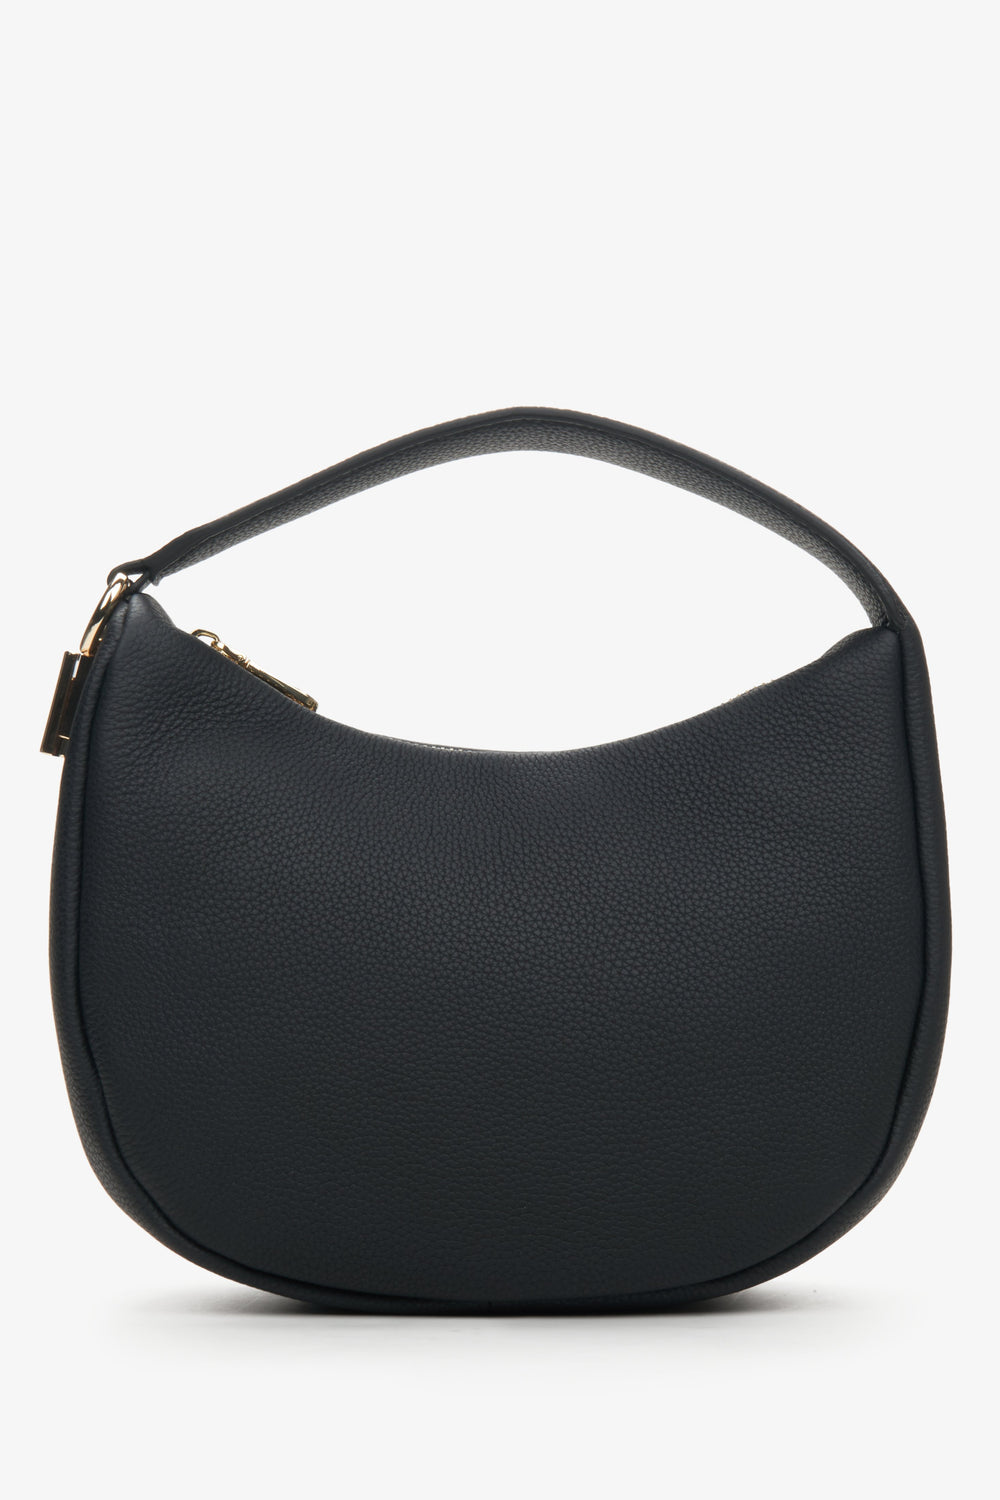 Black Crescent Shaped Handbag made of Genuine Leather Estro ER00114352.